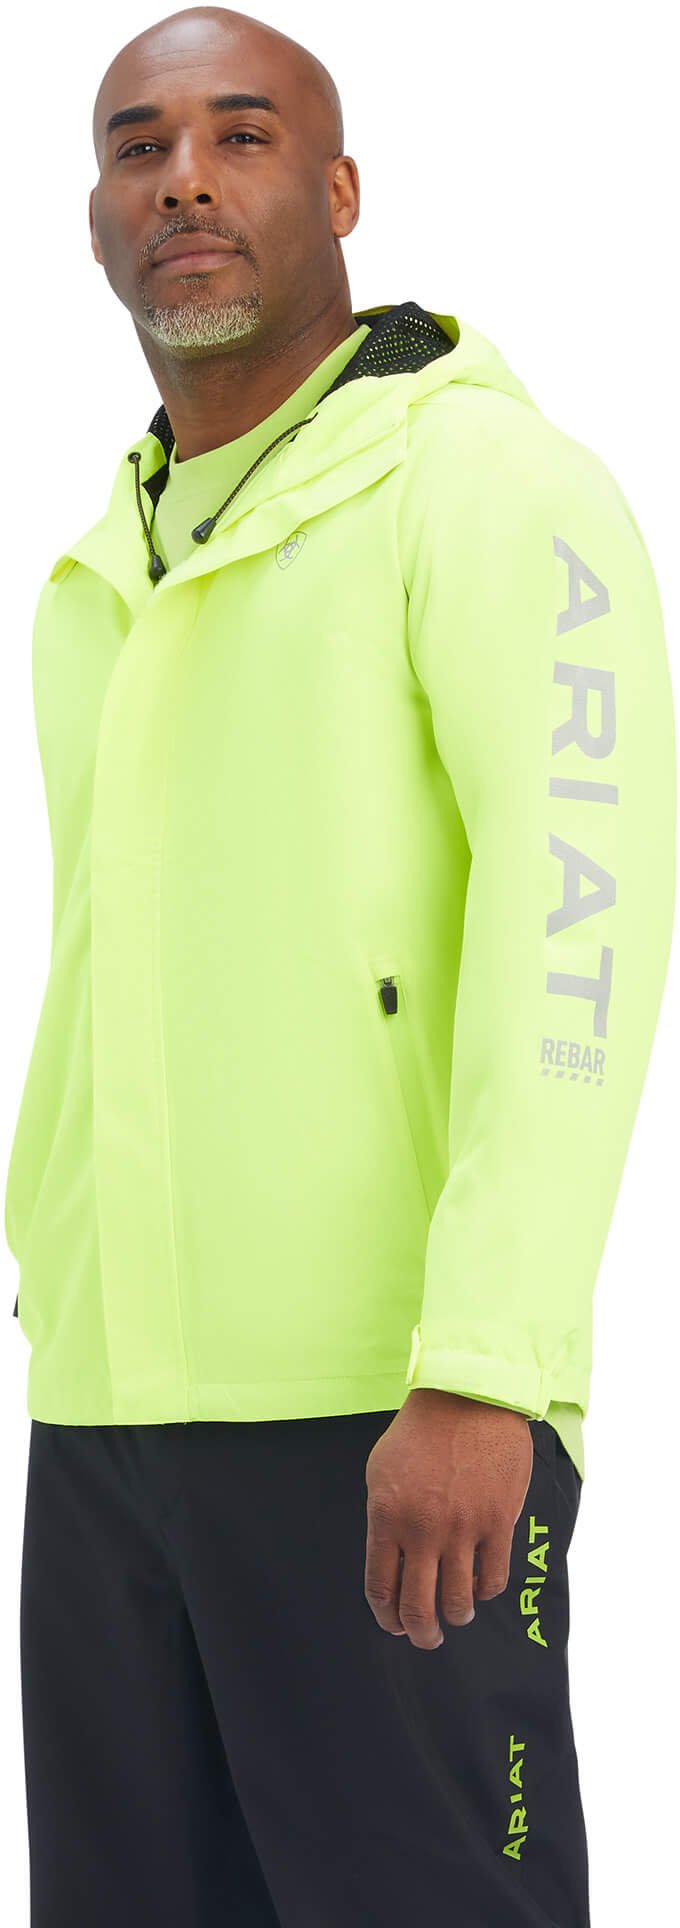 Ariat Rebar Stormshell Logo Waterproof Men's Jacket - BATA Ltd